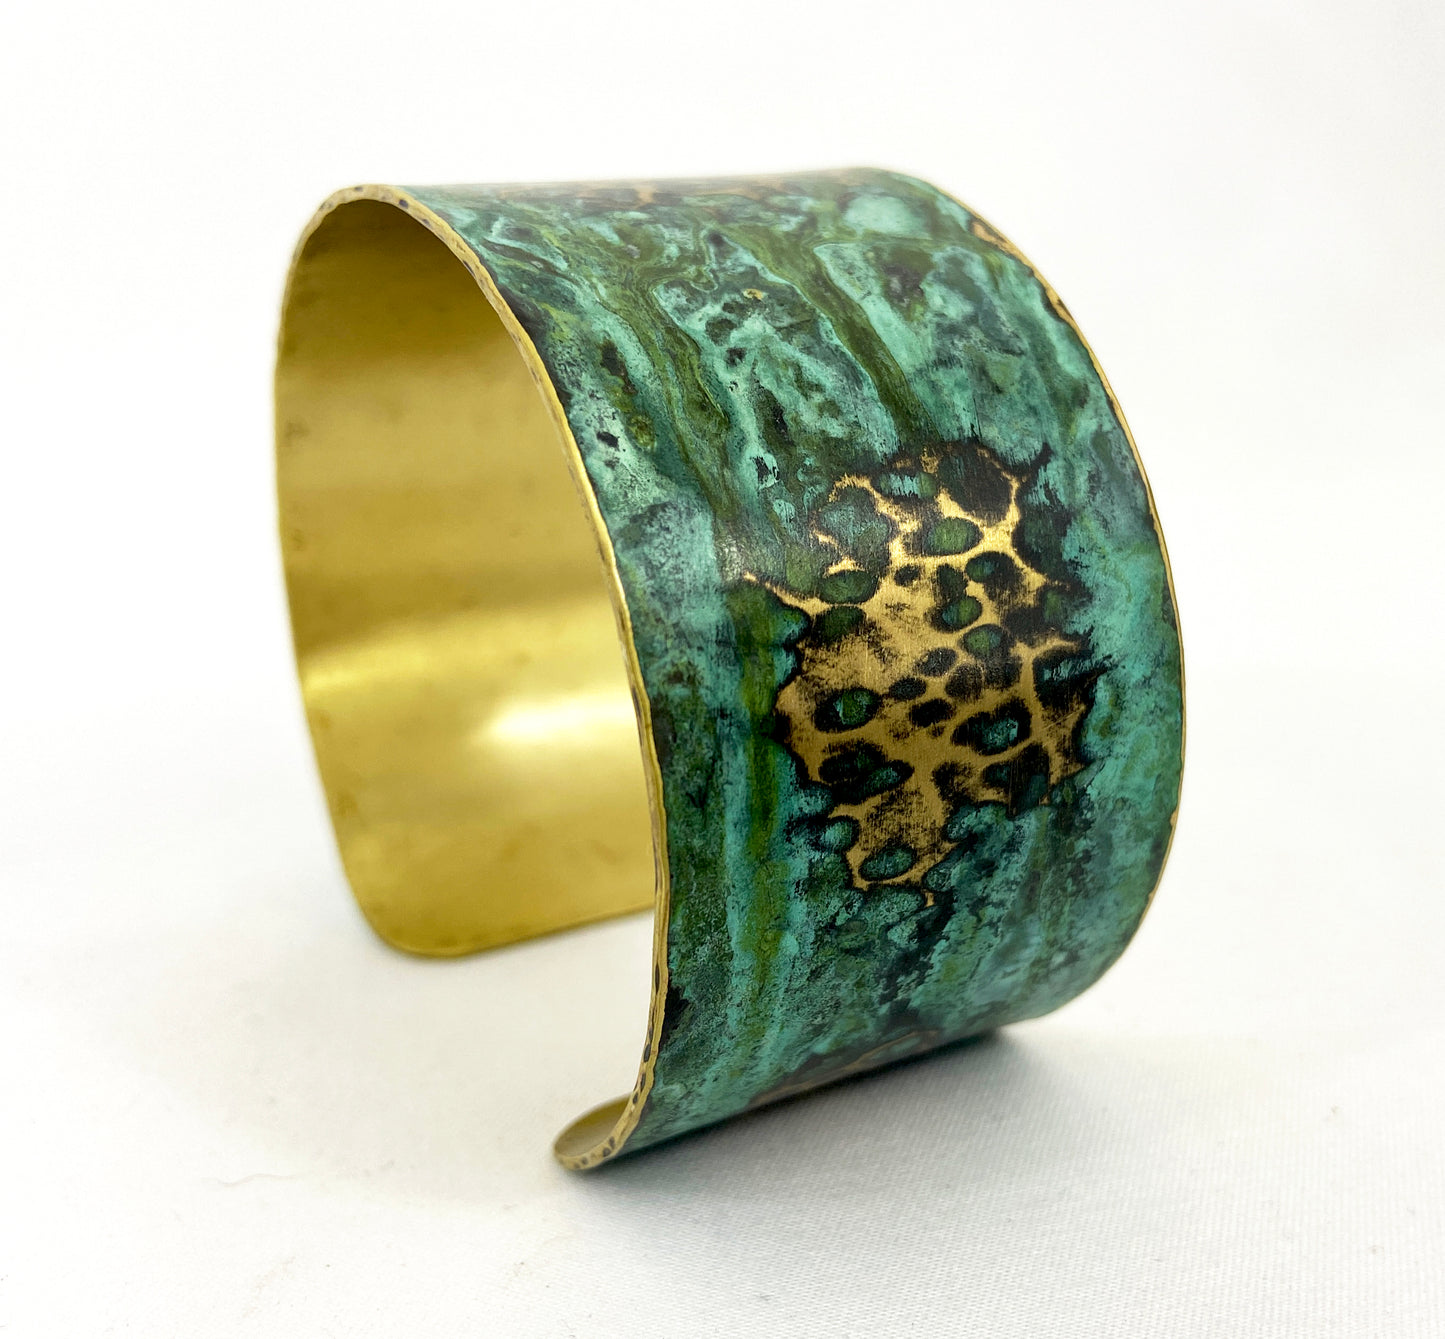 Hammered Green "Crackle" Brass Cuff Bracelet